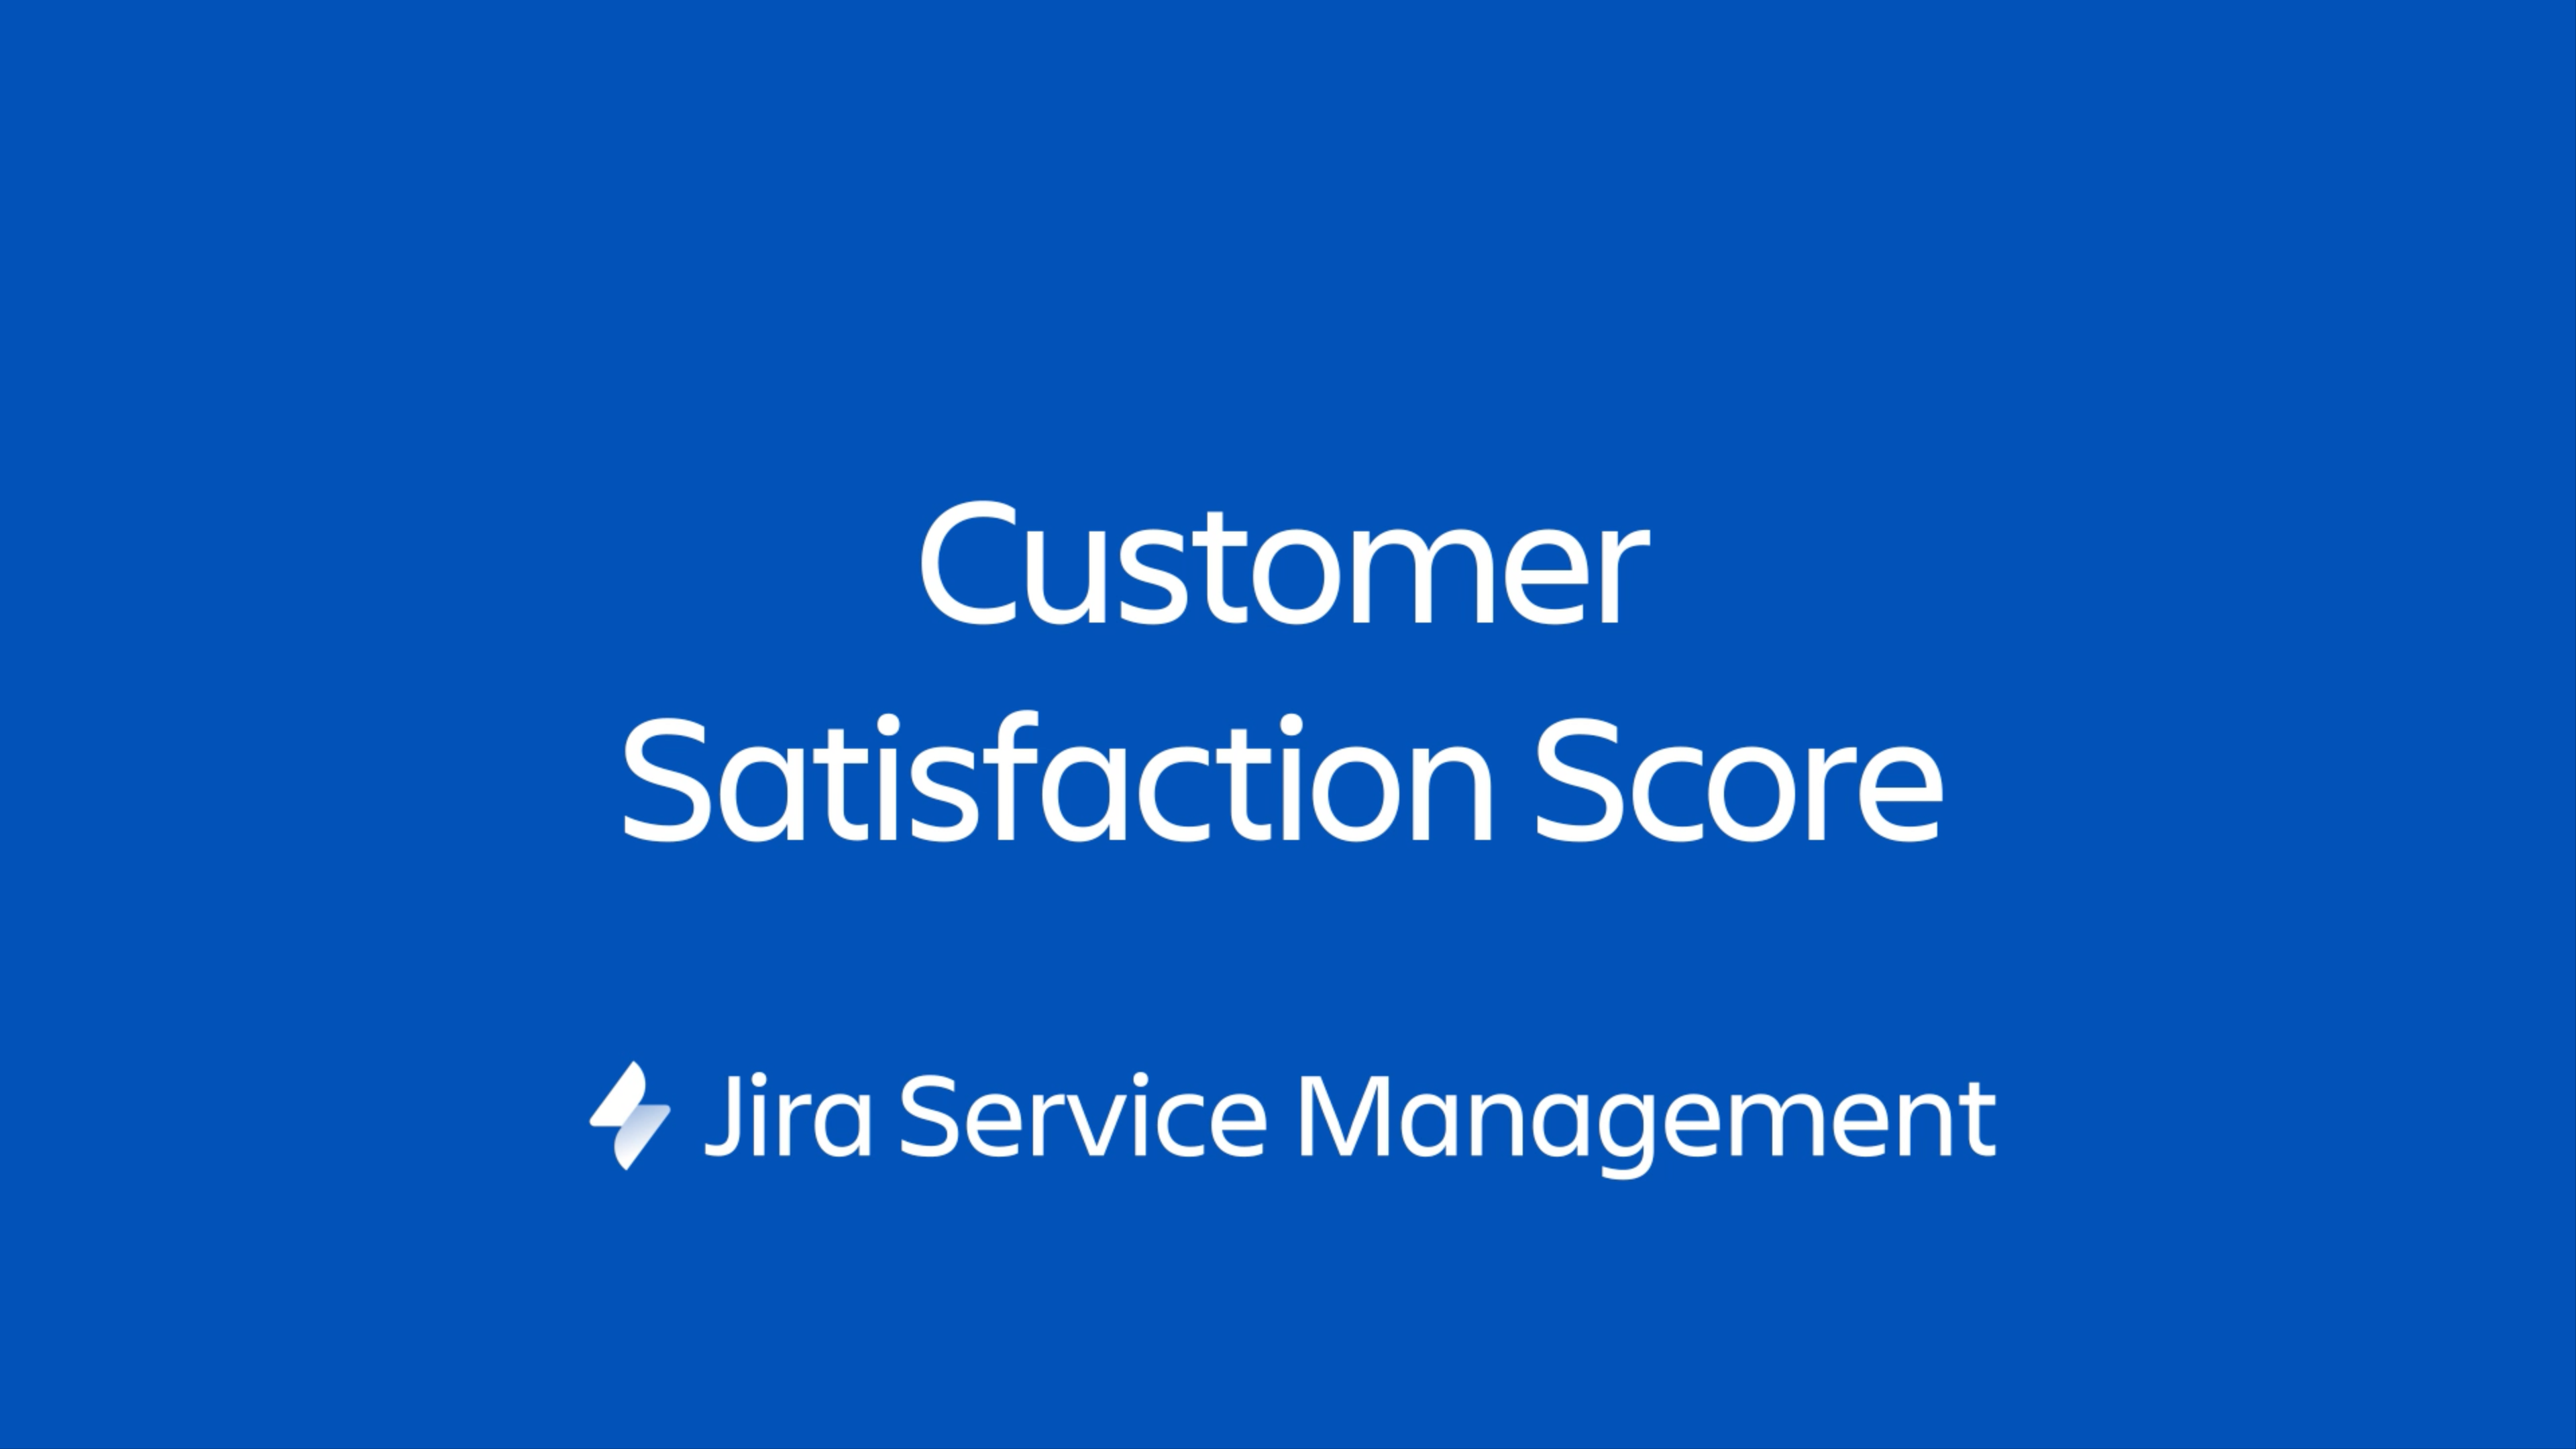 Jira Service Management 위젯은 사용자가 관리하는 모든 웹 페이지에 포함할 수 있는 미니 포털입니다.